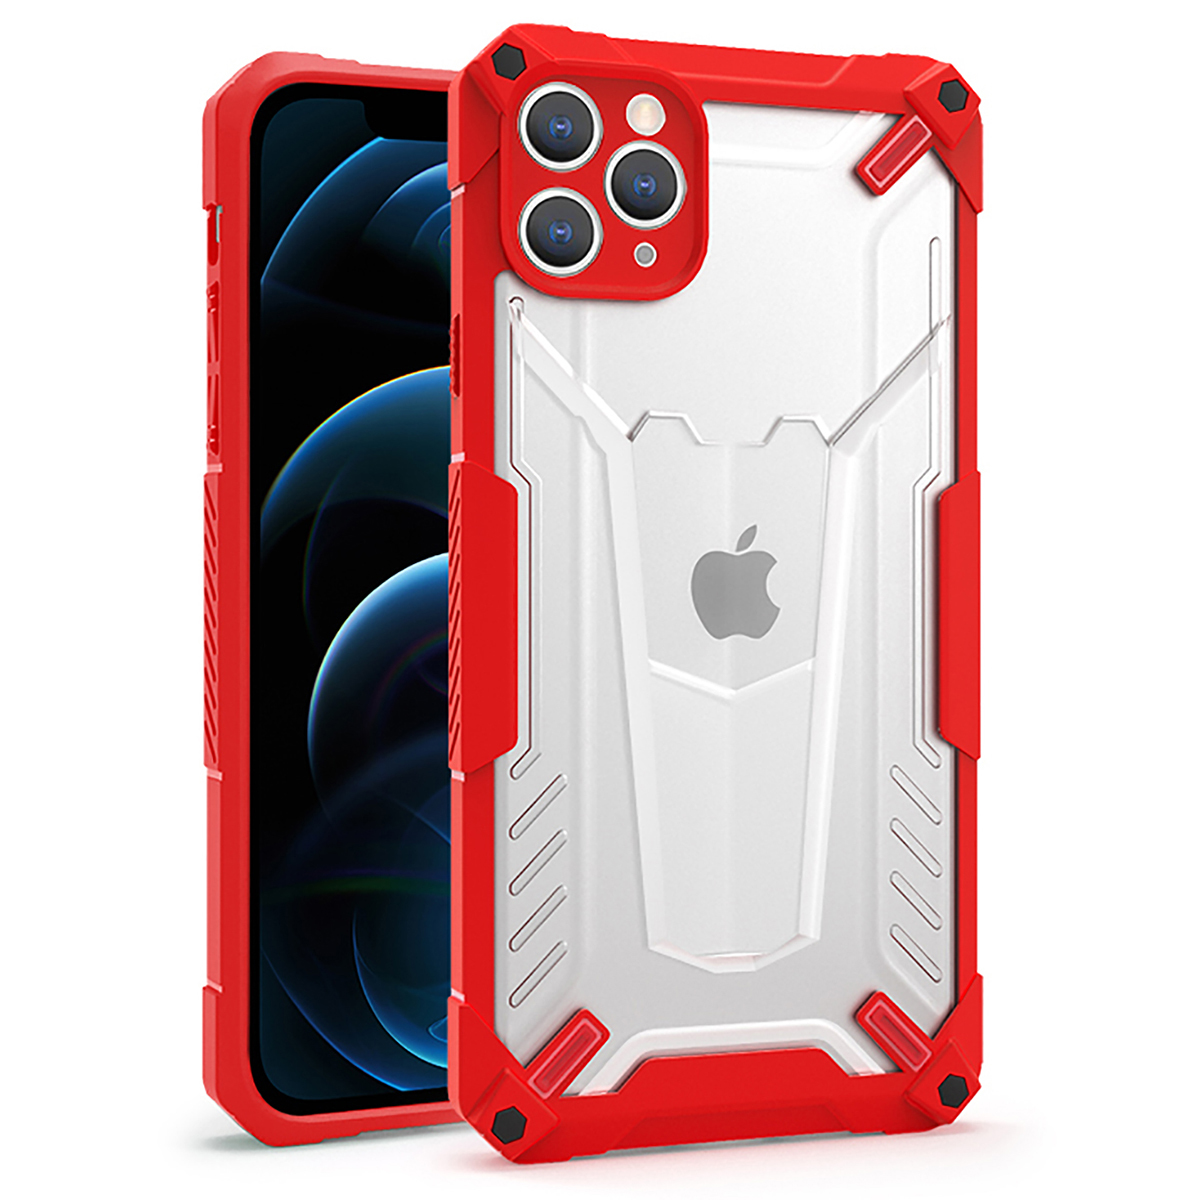 Pokrowiec etui Tel Protect Hybrid Case czerwone APPLE iPhone 8